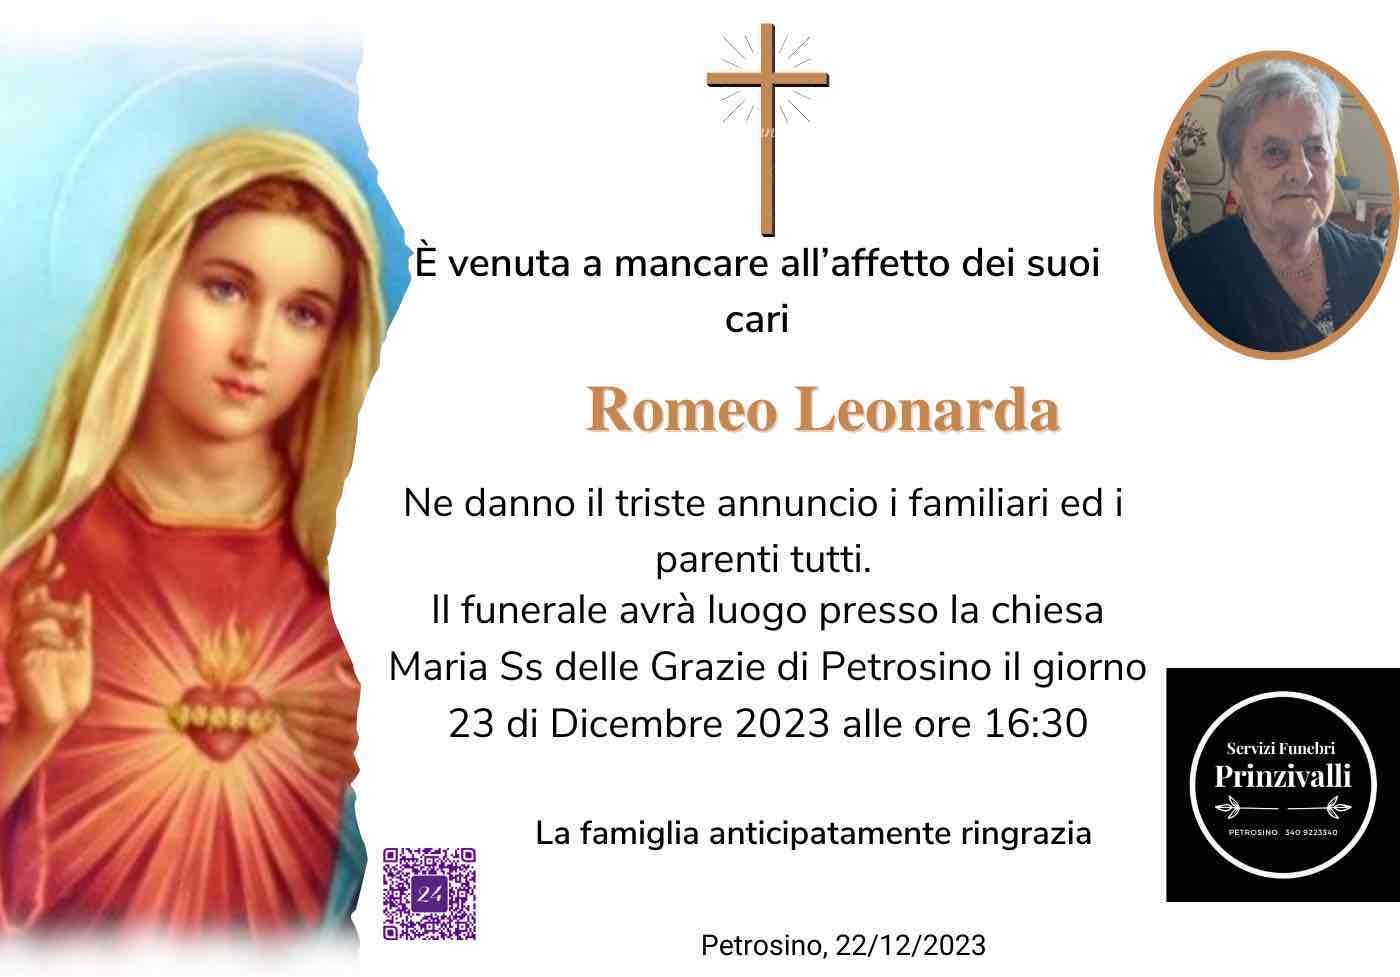 Leonarda Romeo